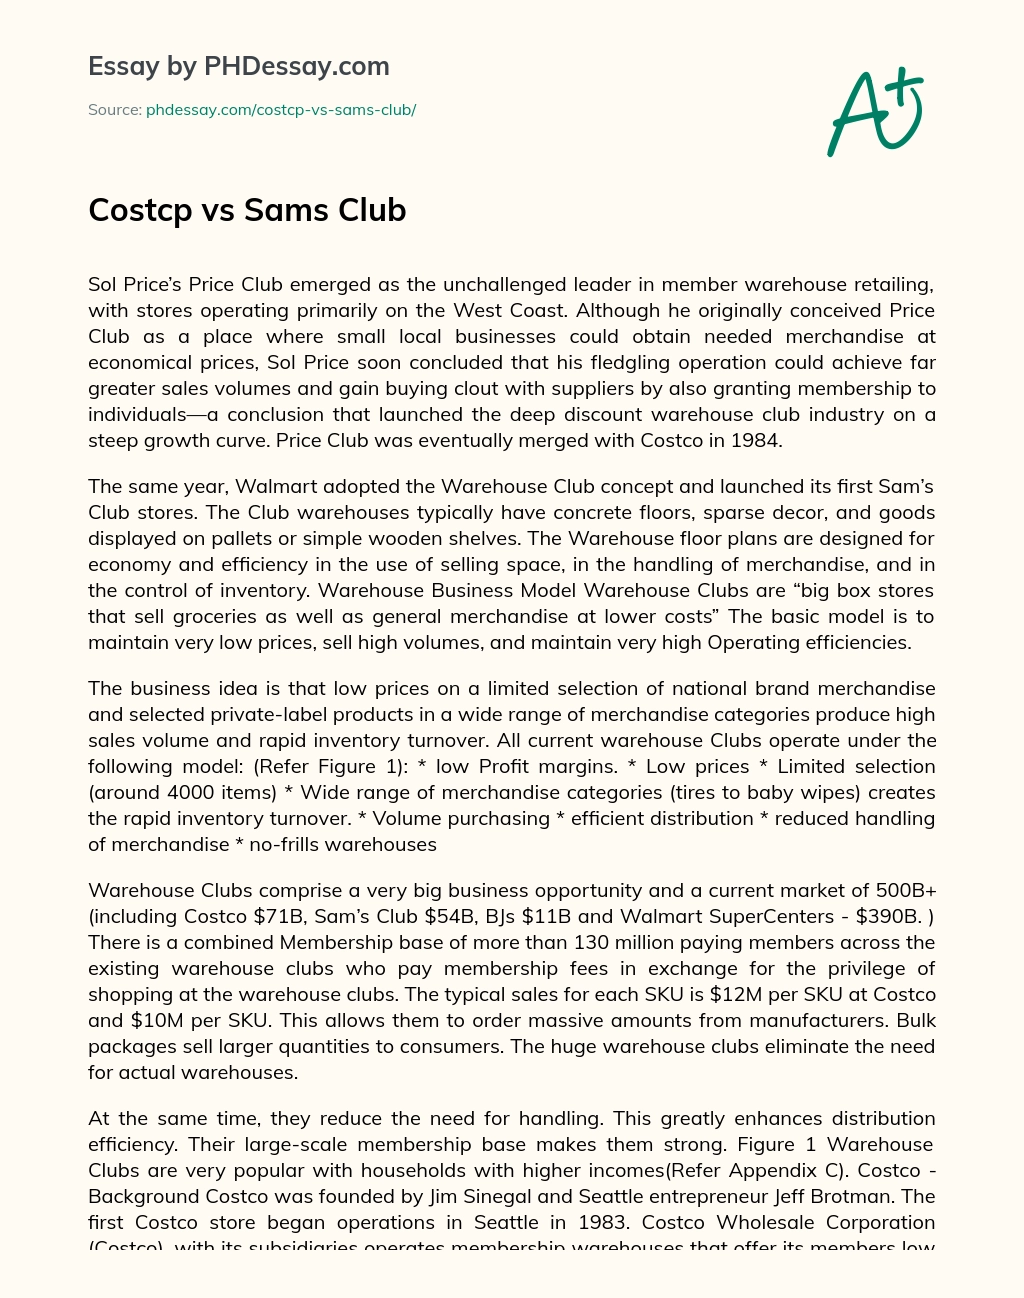 Costcp vs Sams Club essay